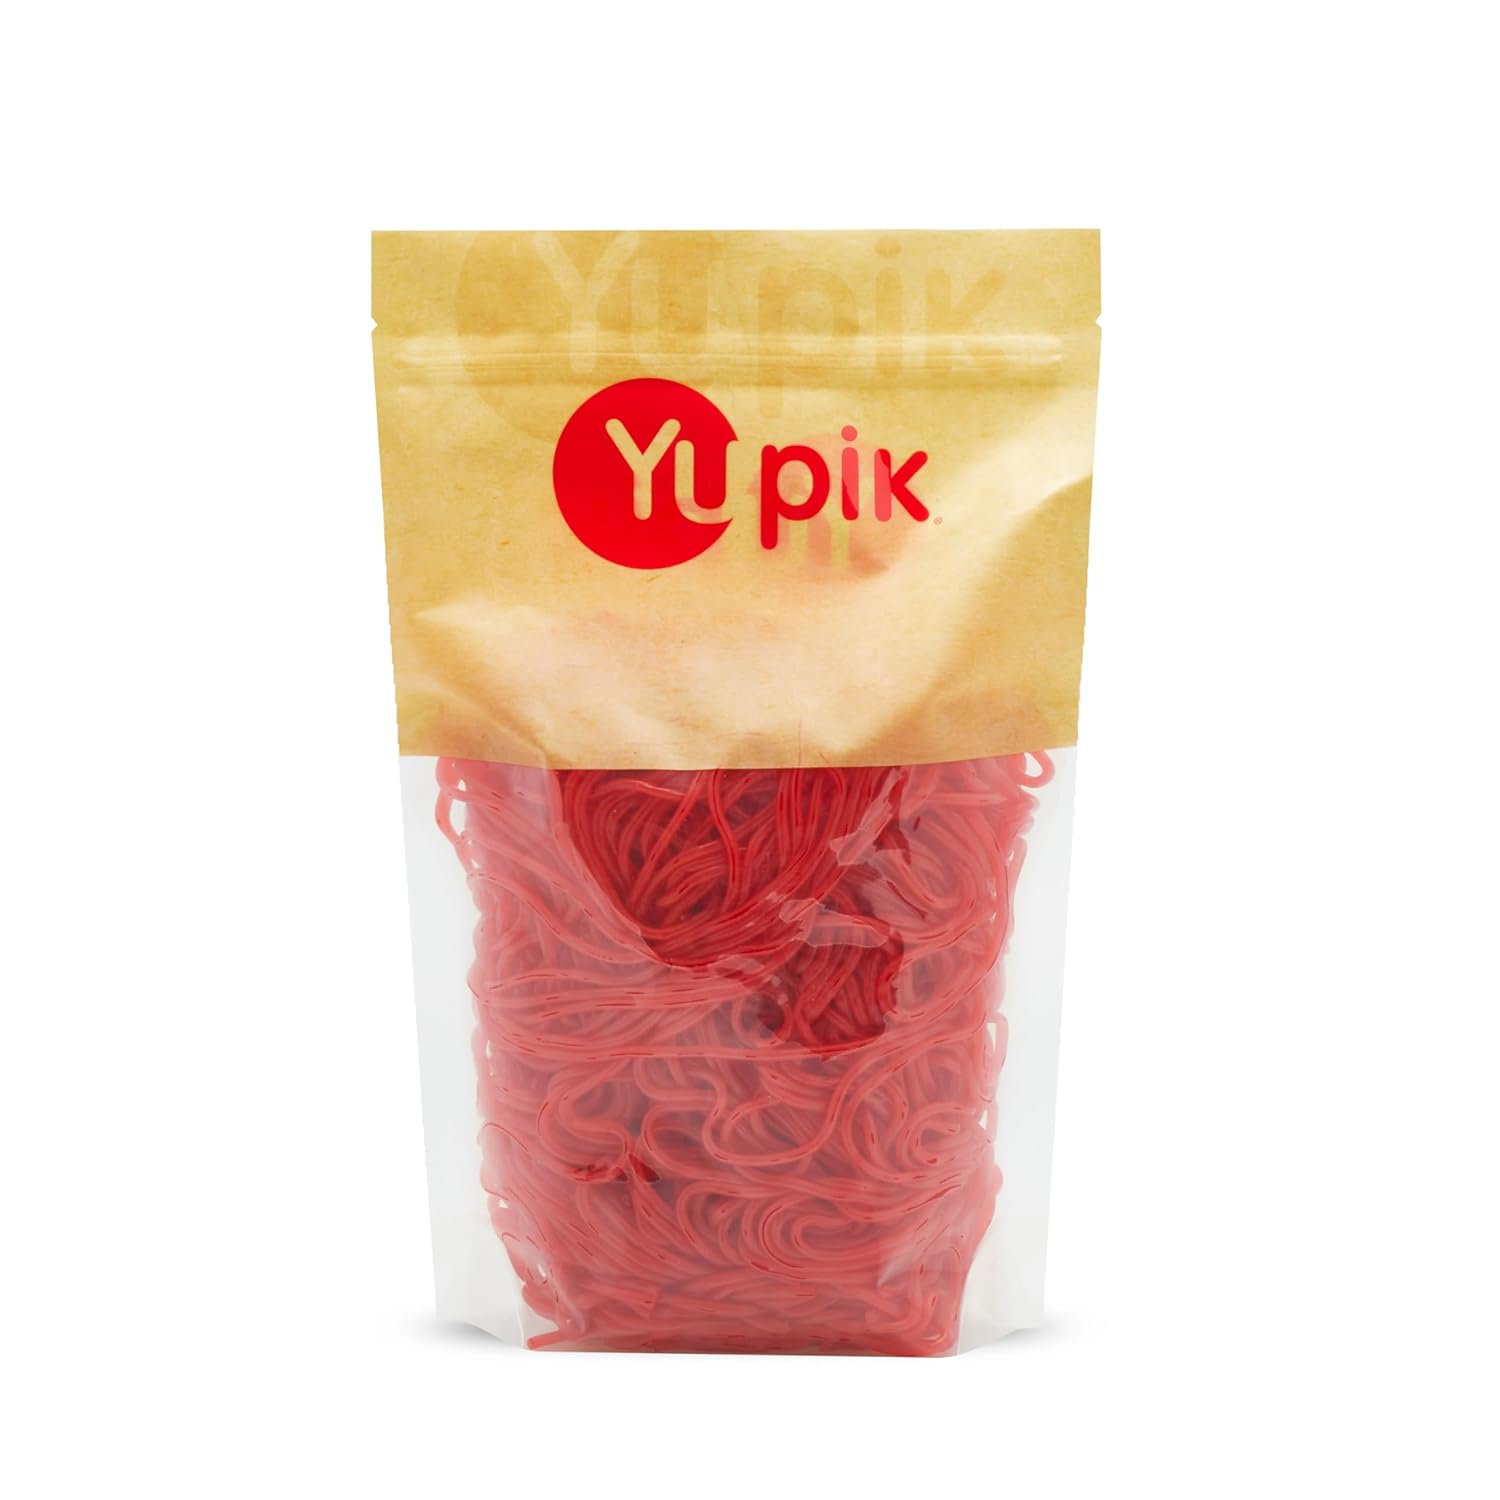 Yupik Dutch Strawberry Licorice, Classic Candy, 2.2 lb, Pack of 1